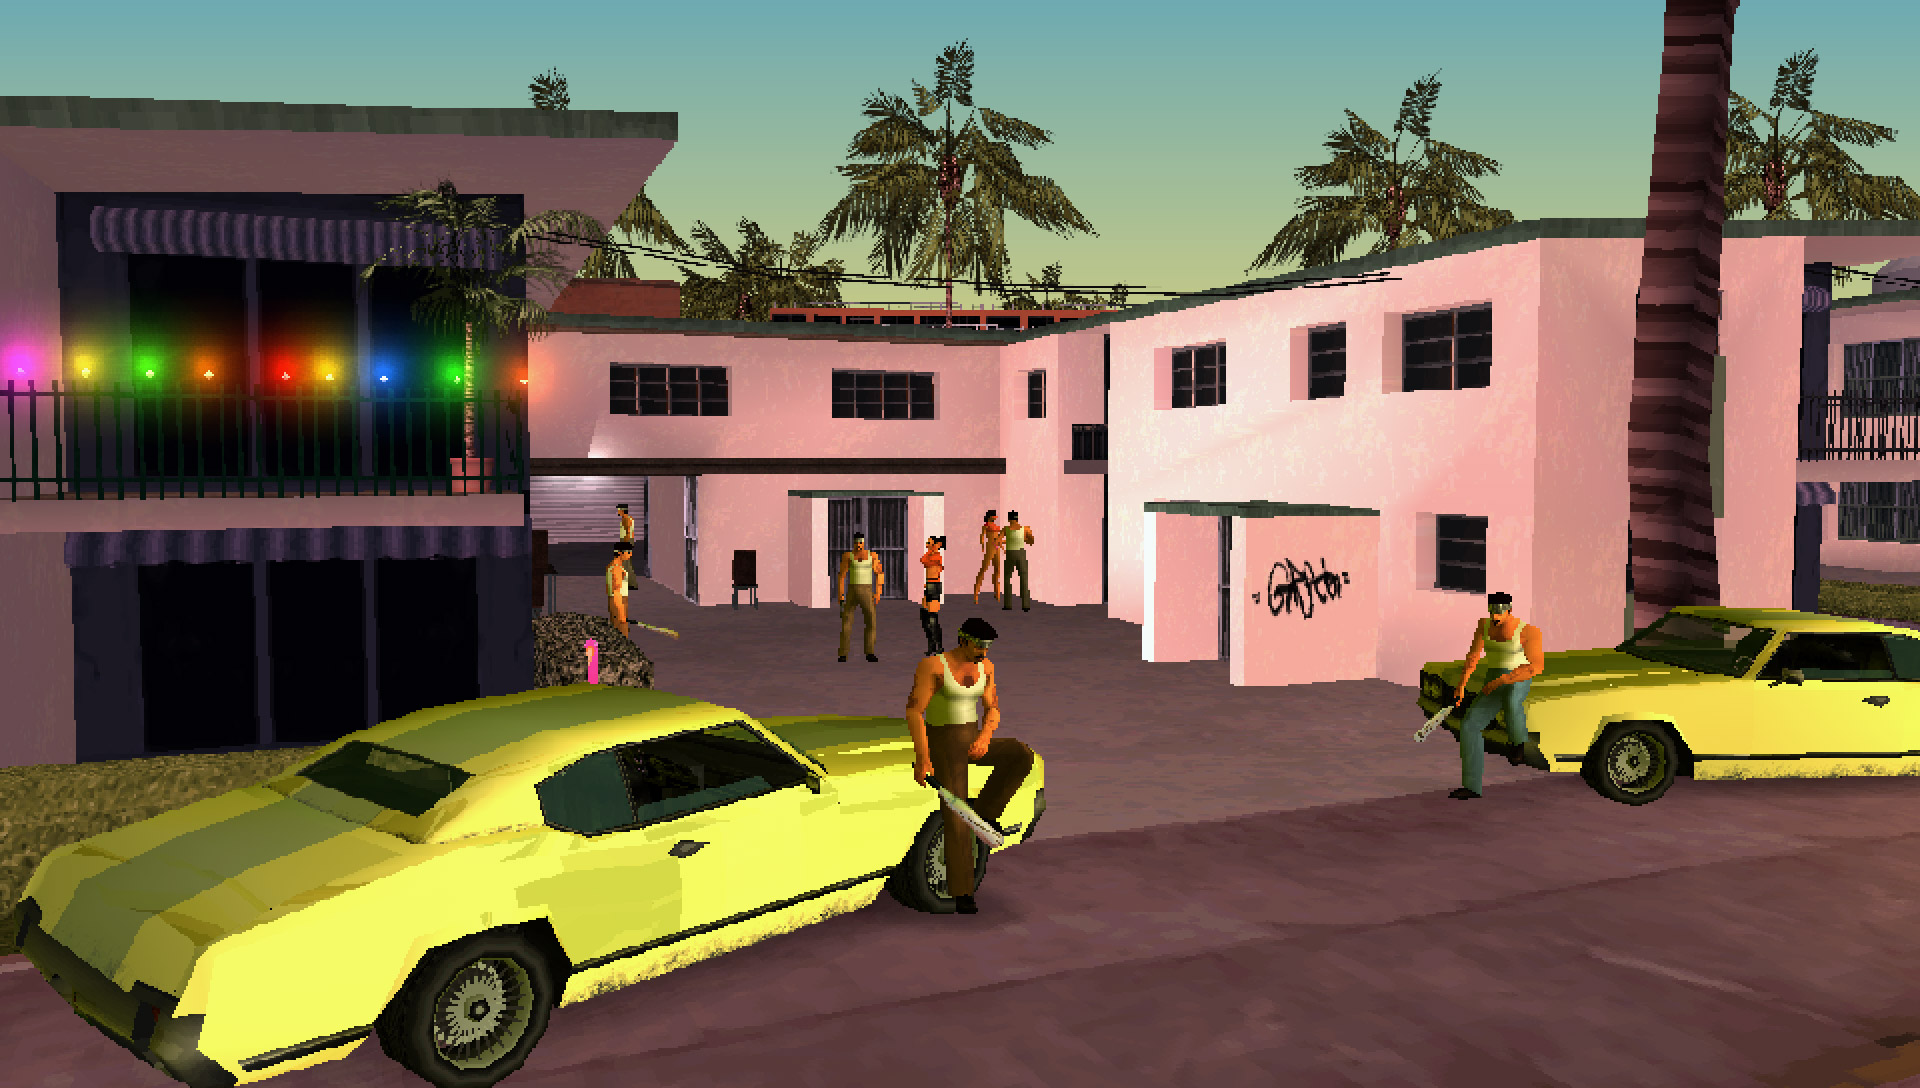 Grand Theft Auto: Vice City Stories, PSP